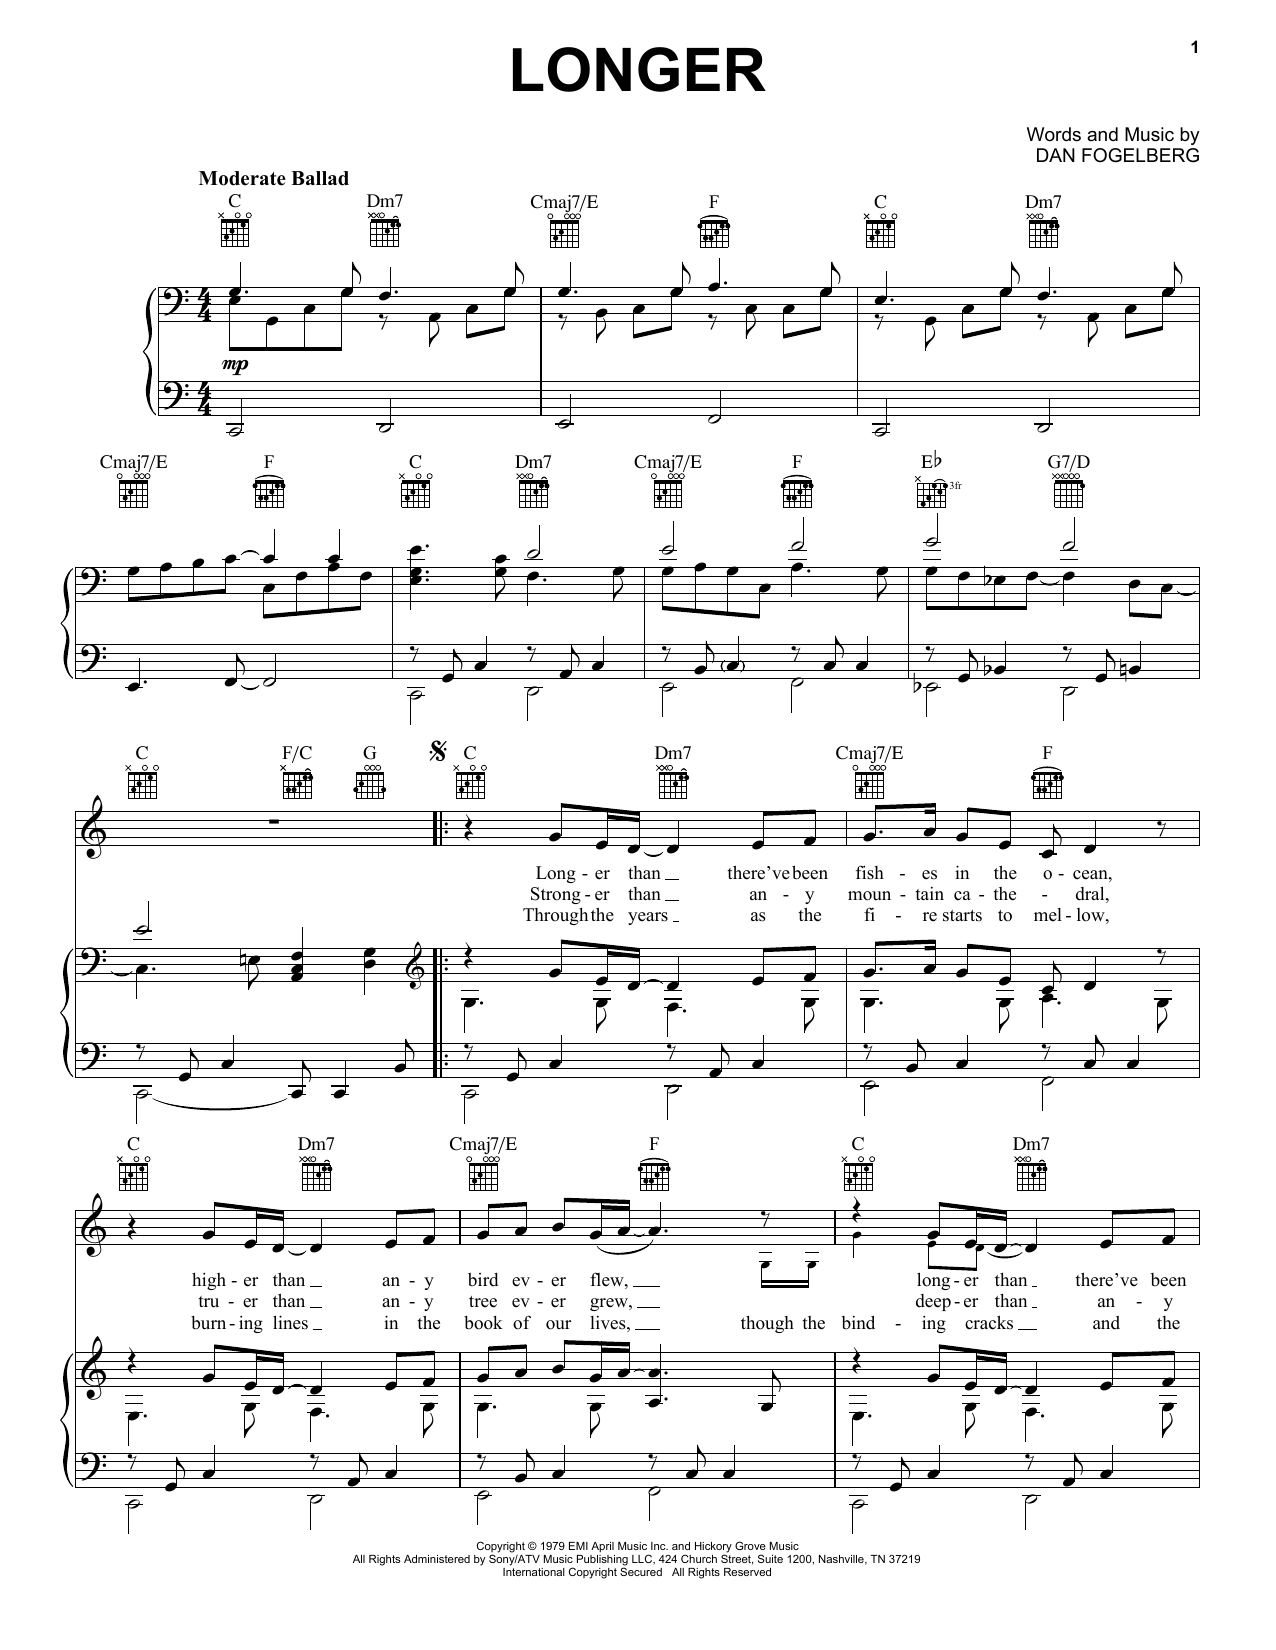 Dan Fogelberg Longer Sheet Music Notes & Chords for Ukulele - Download or Print PDF